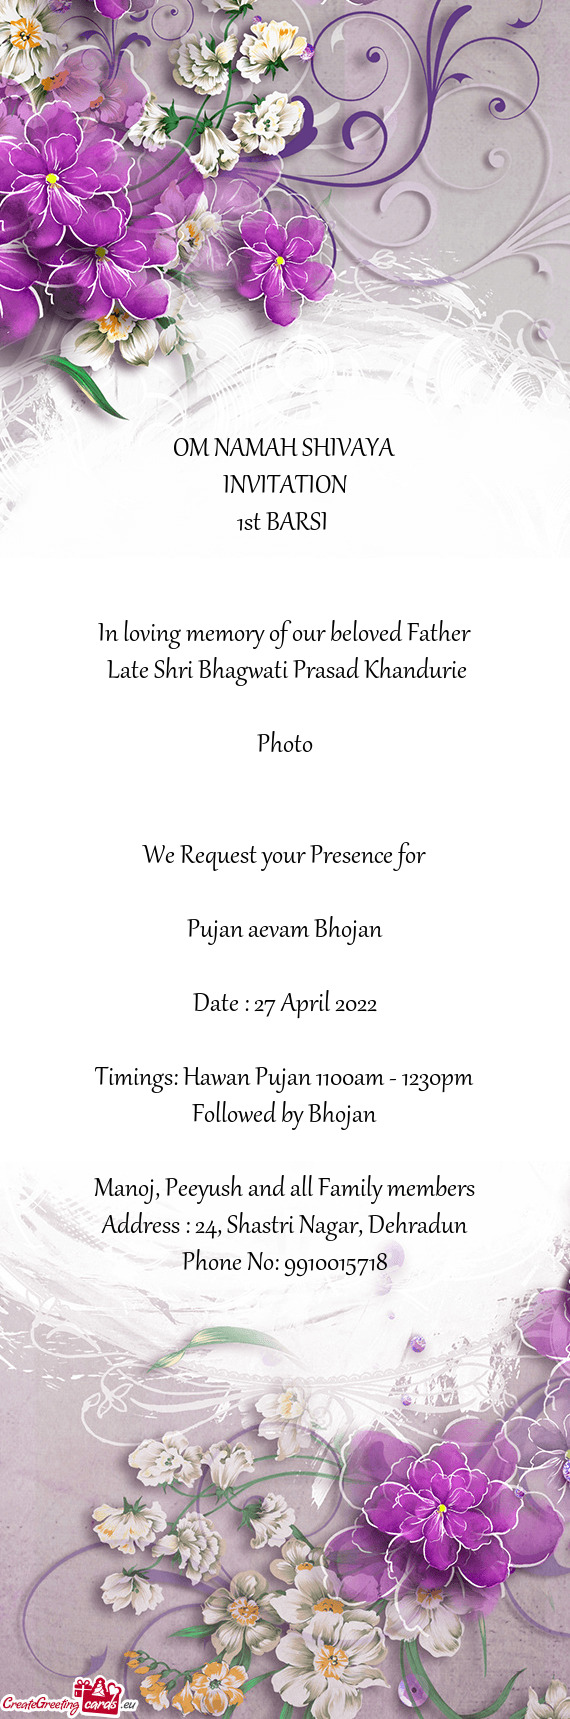 Late Shri Bhagwati Prasad Khandurie